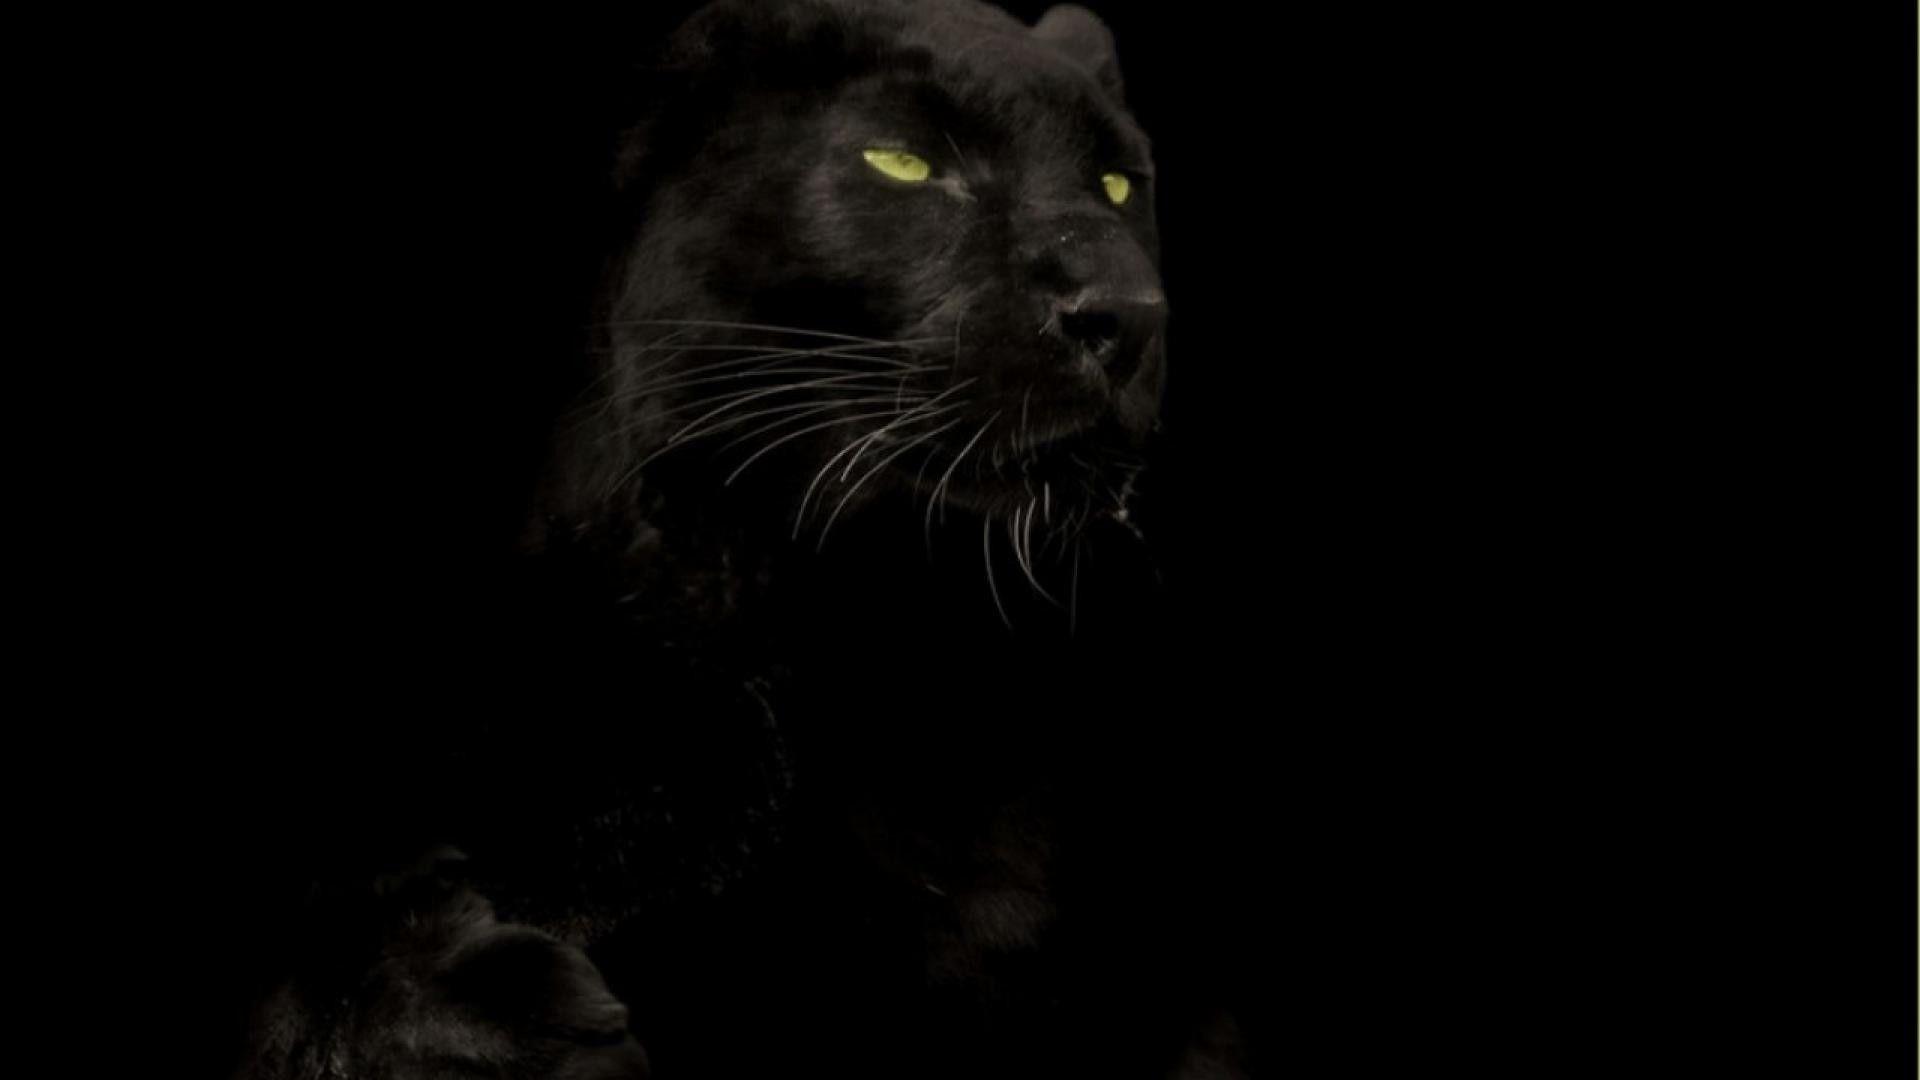  Black  Panther  Animal Wallpapers  Wallpaper  Cave